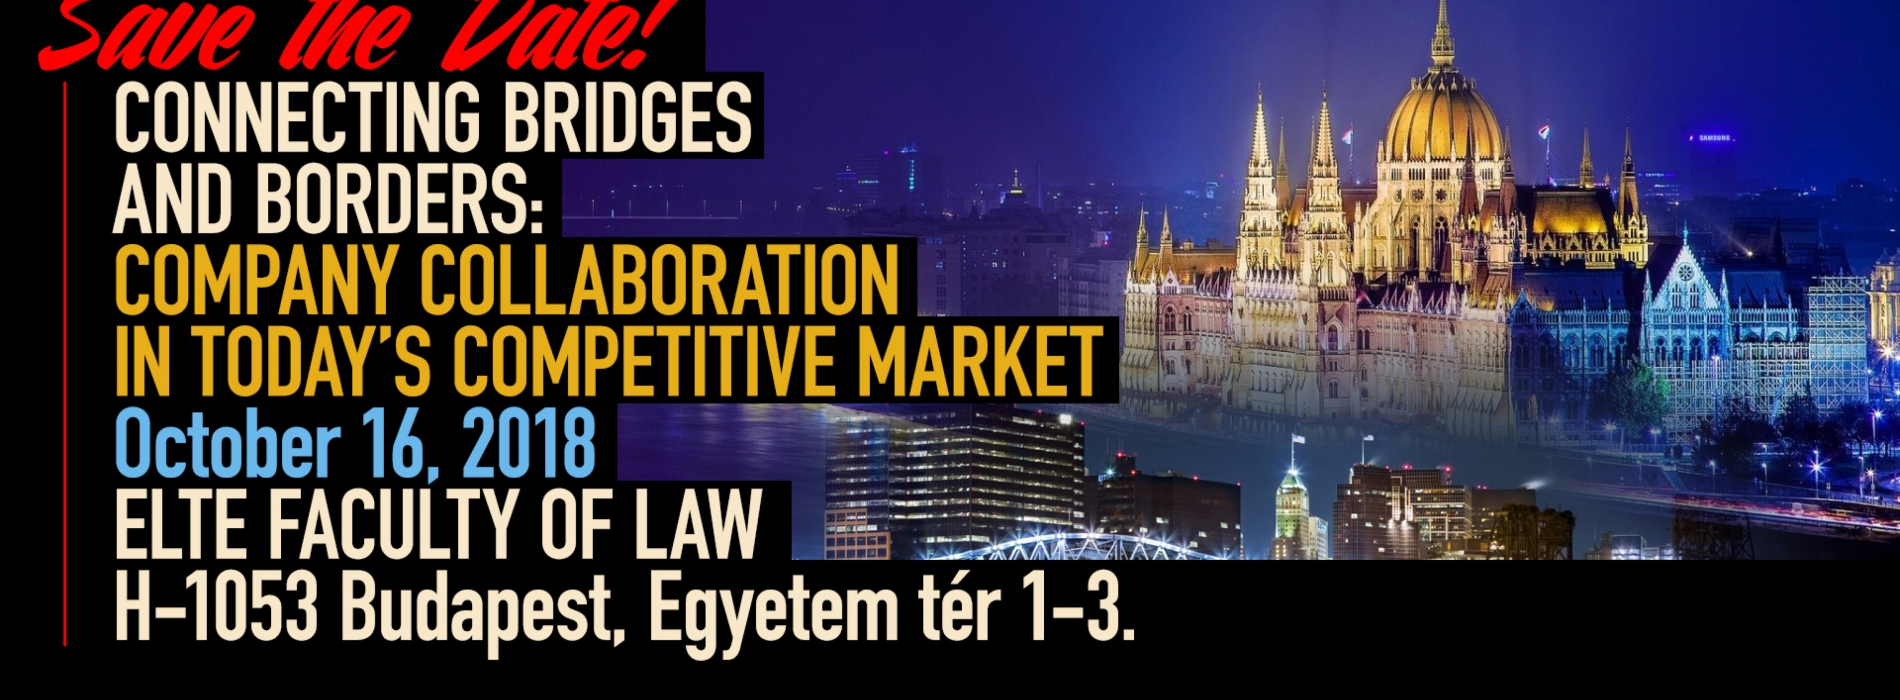 Connecting Bridges and Borders: Company Collaboration in Today’s Competitive Market nemzetközi konferencia Budapesten